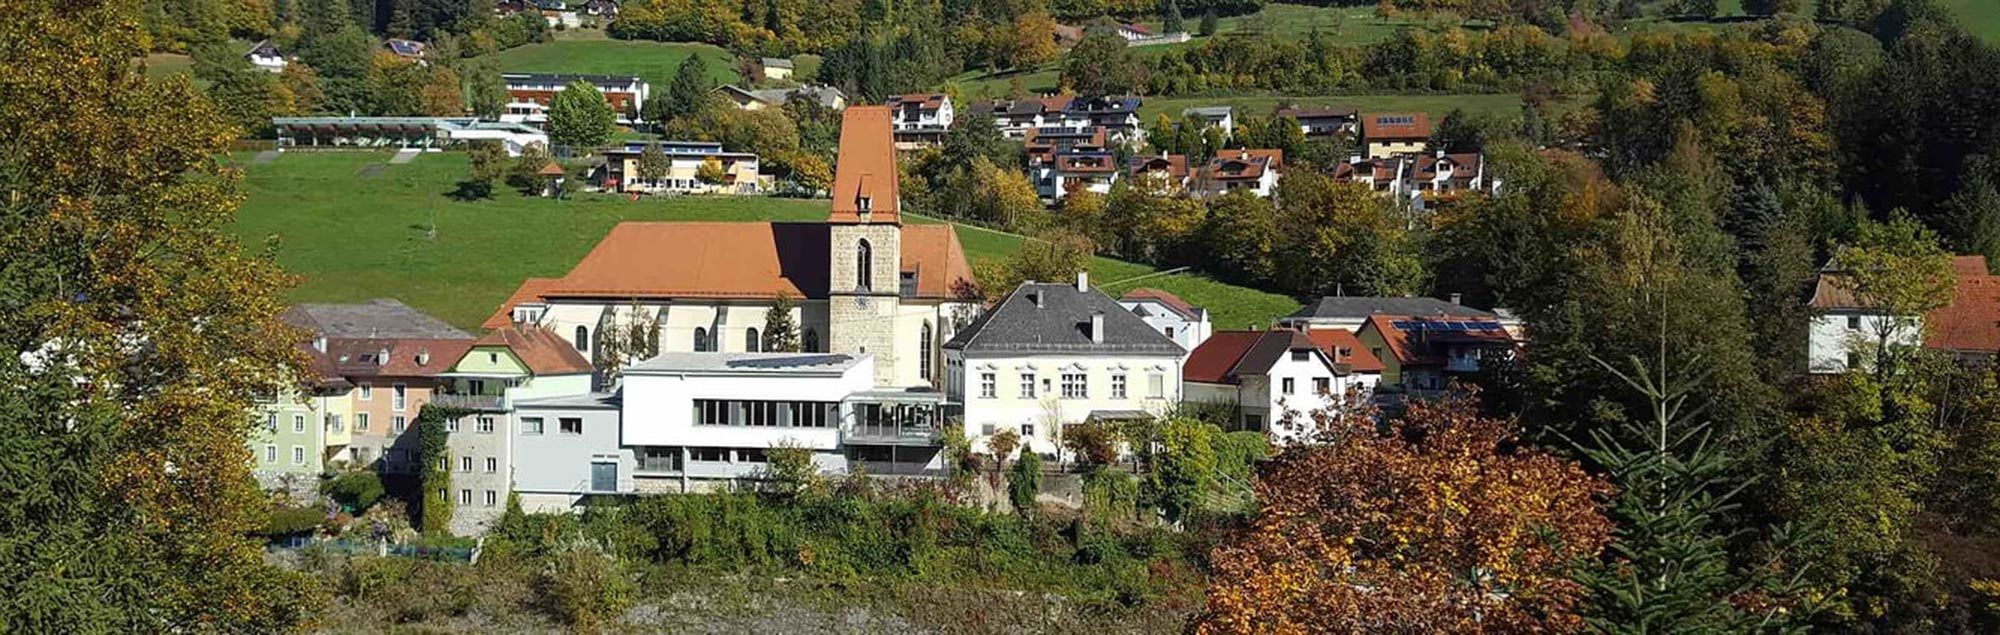 Pfarrkirche - Pfarrhof - Pfarrzentrum